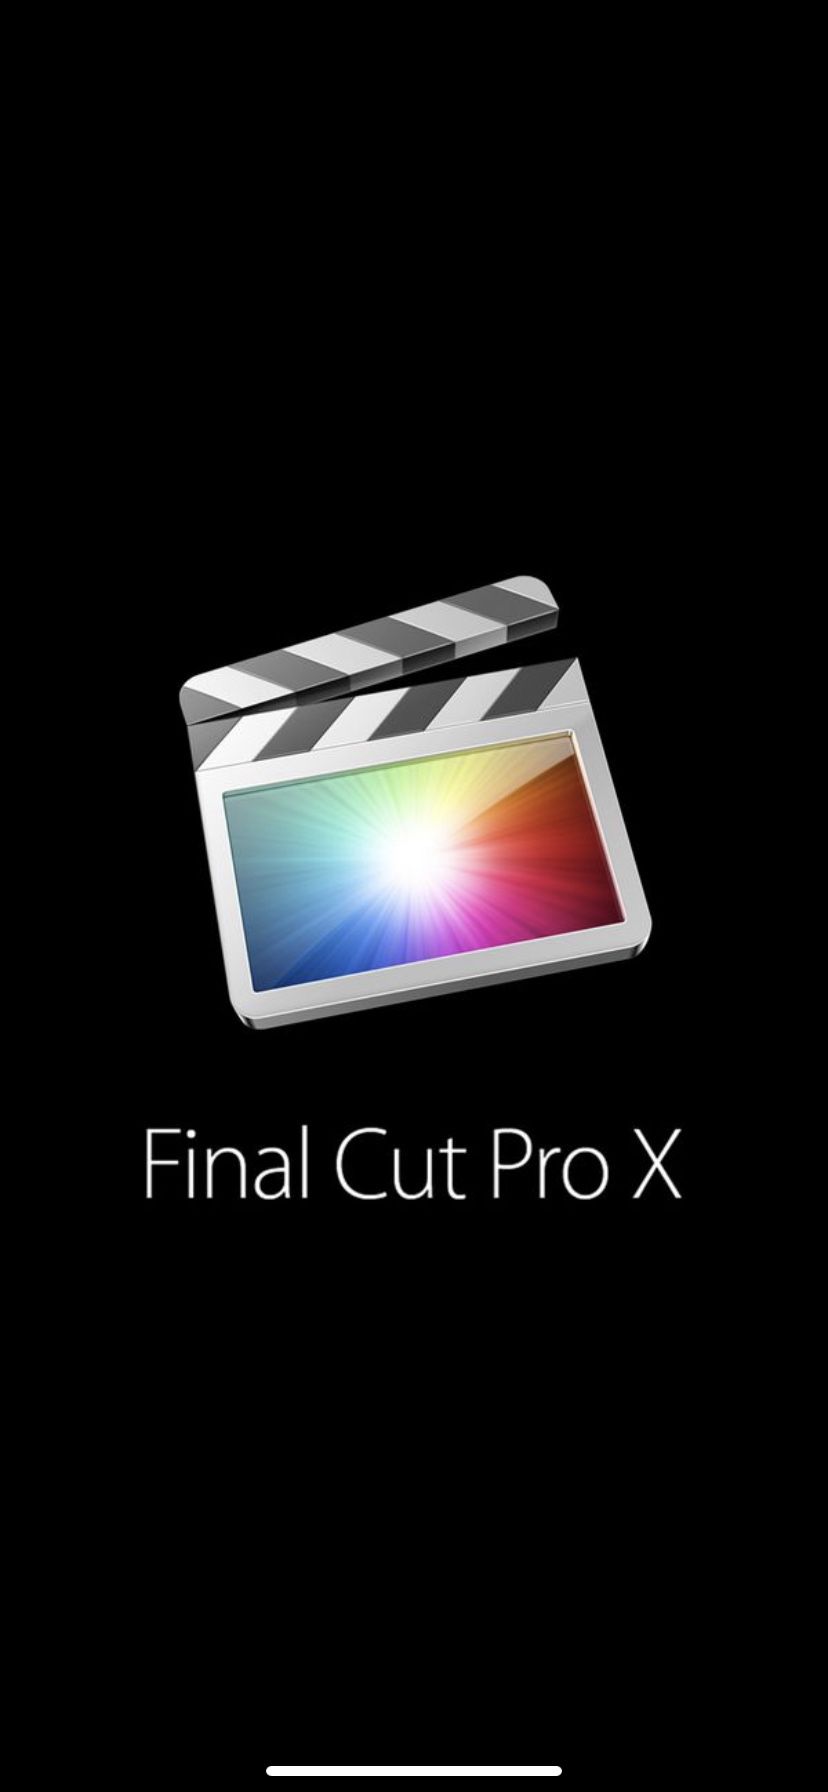 Final Cut Pro version 10.4.6